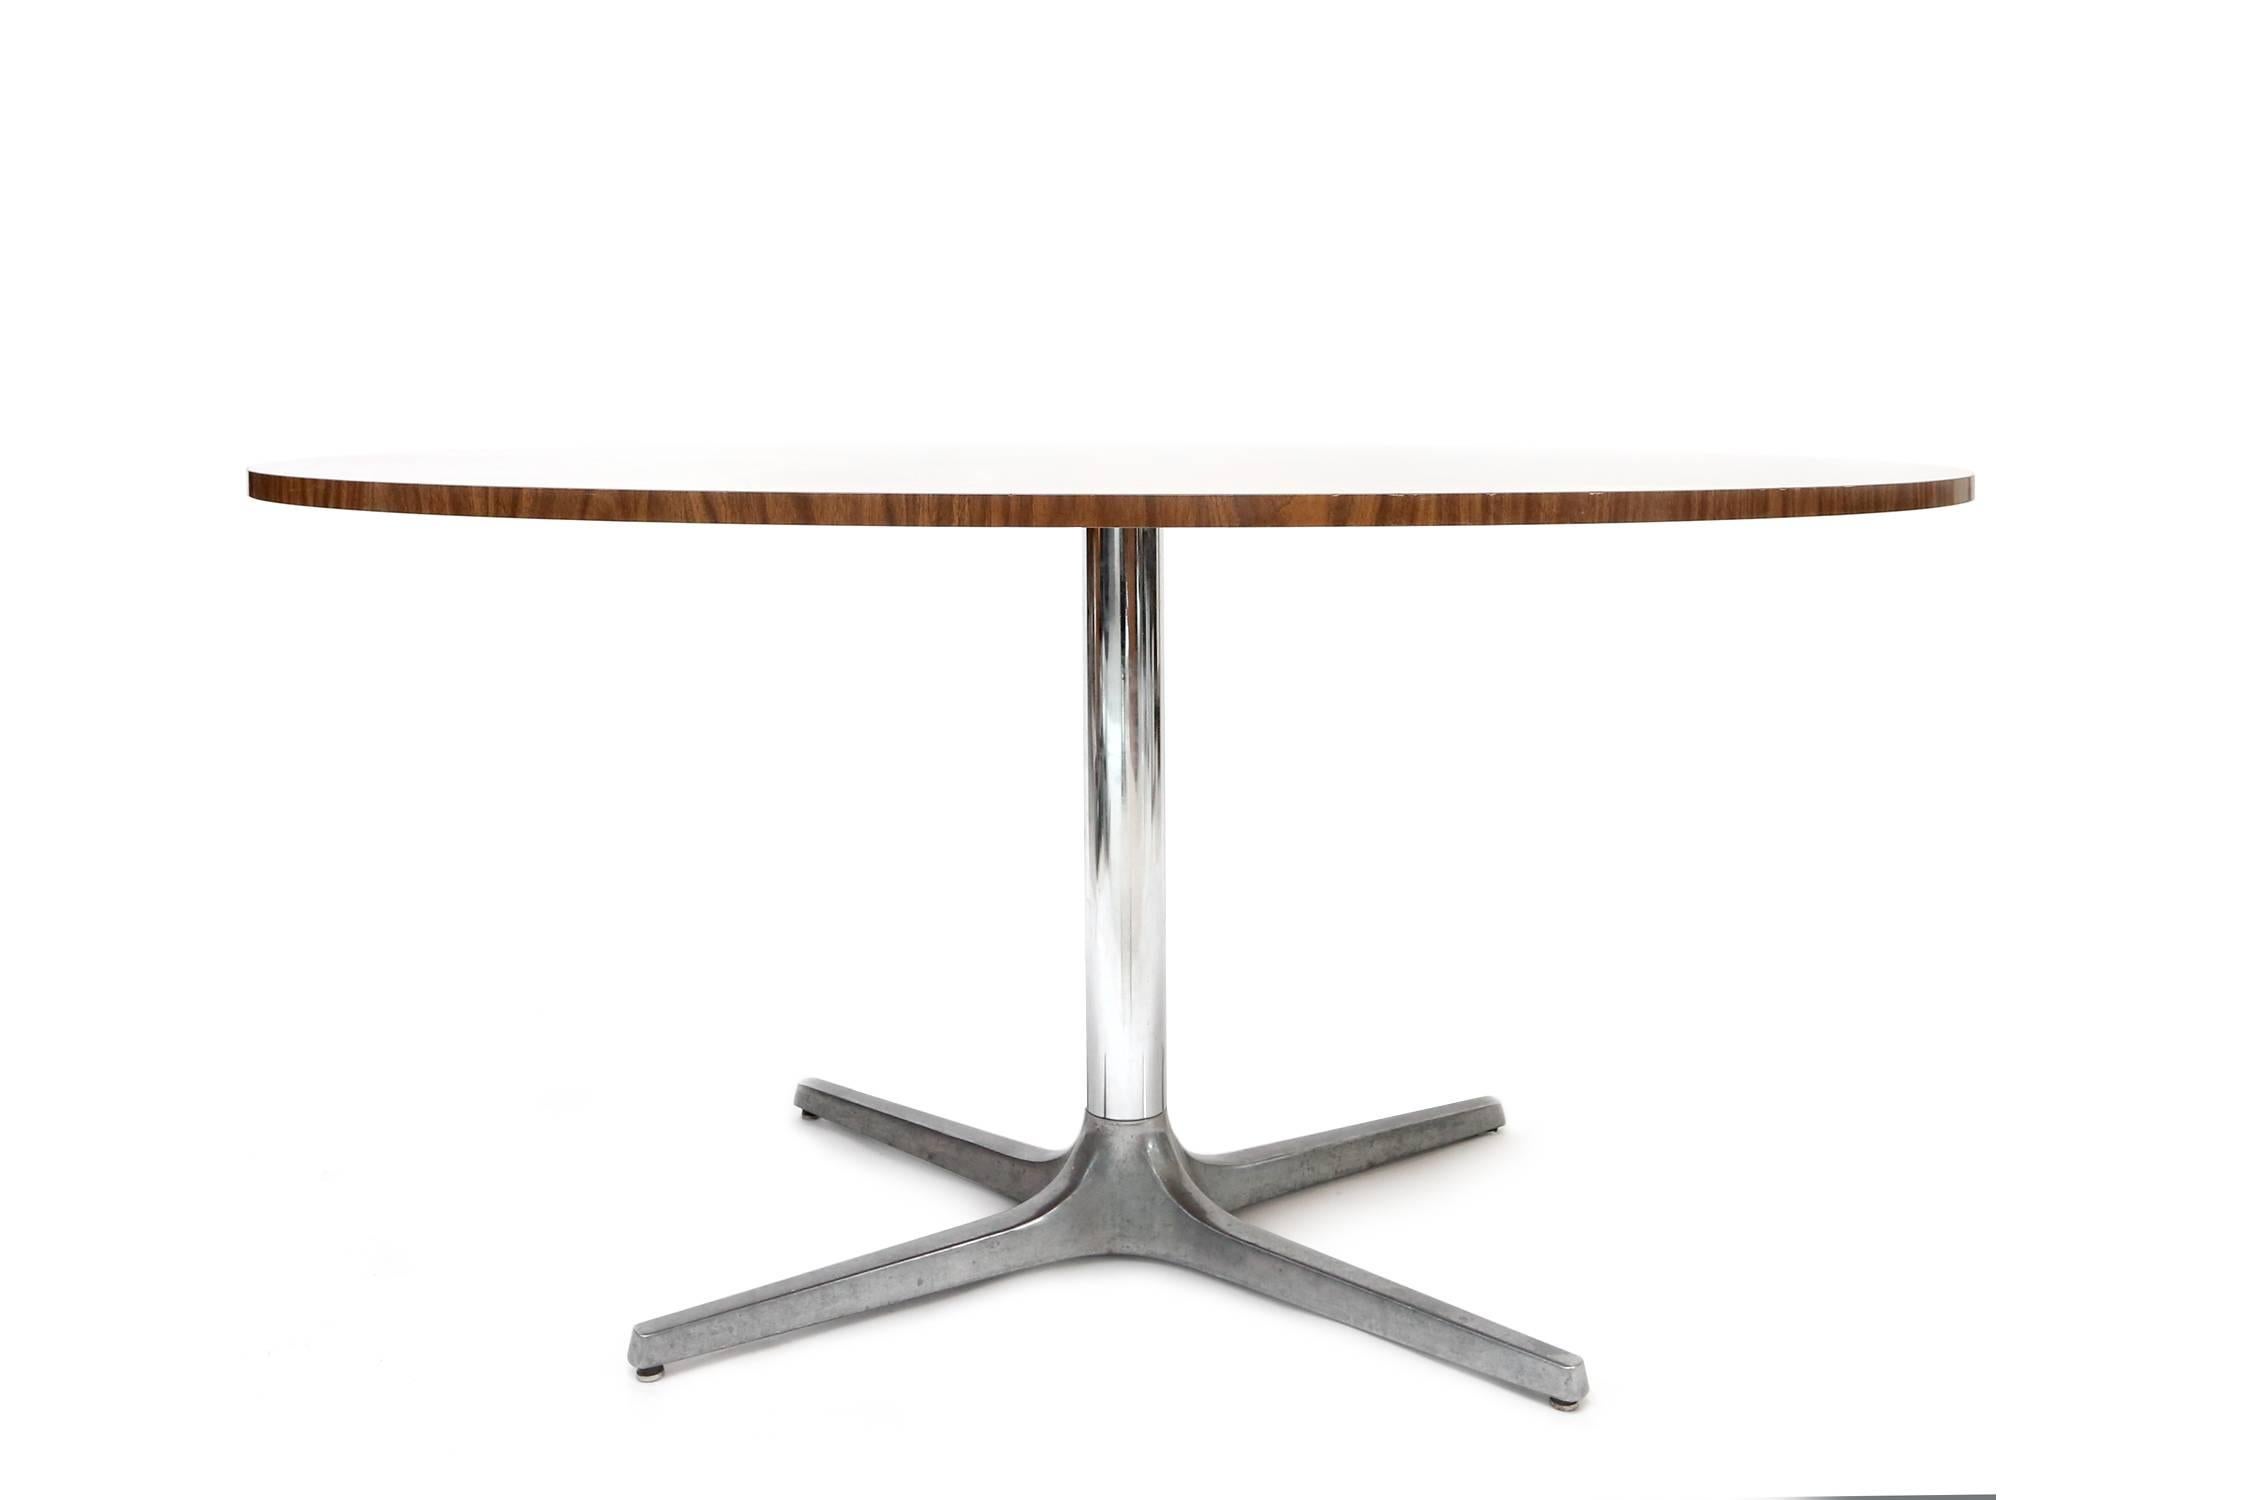 Star trek chromcraft dining table.
Aluminum base laminate rosewood top.
Vladimir Kagan style.
Sculpta series, USA, circa 1960s.
Measure: L 140 cm, W 90 cm, H 74 cm.
   